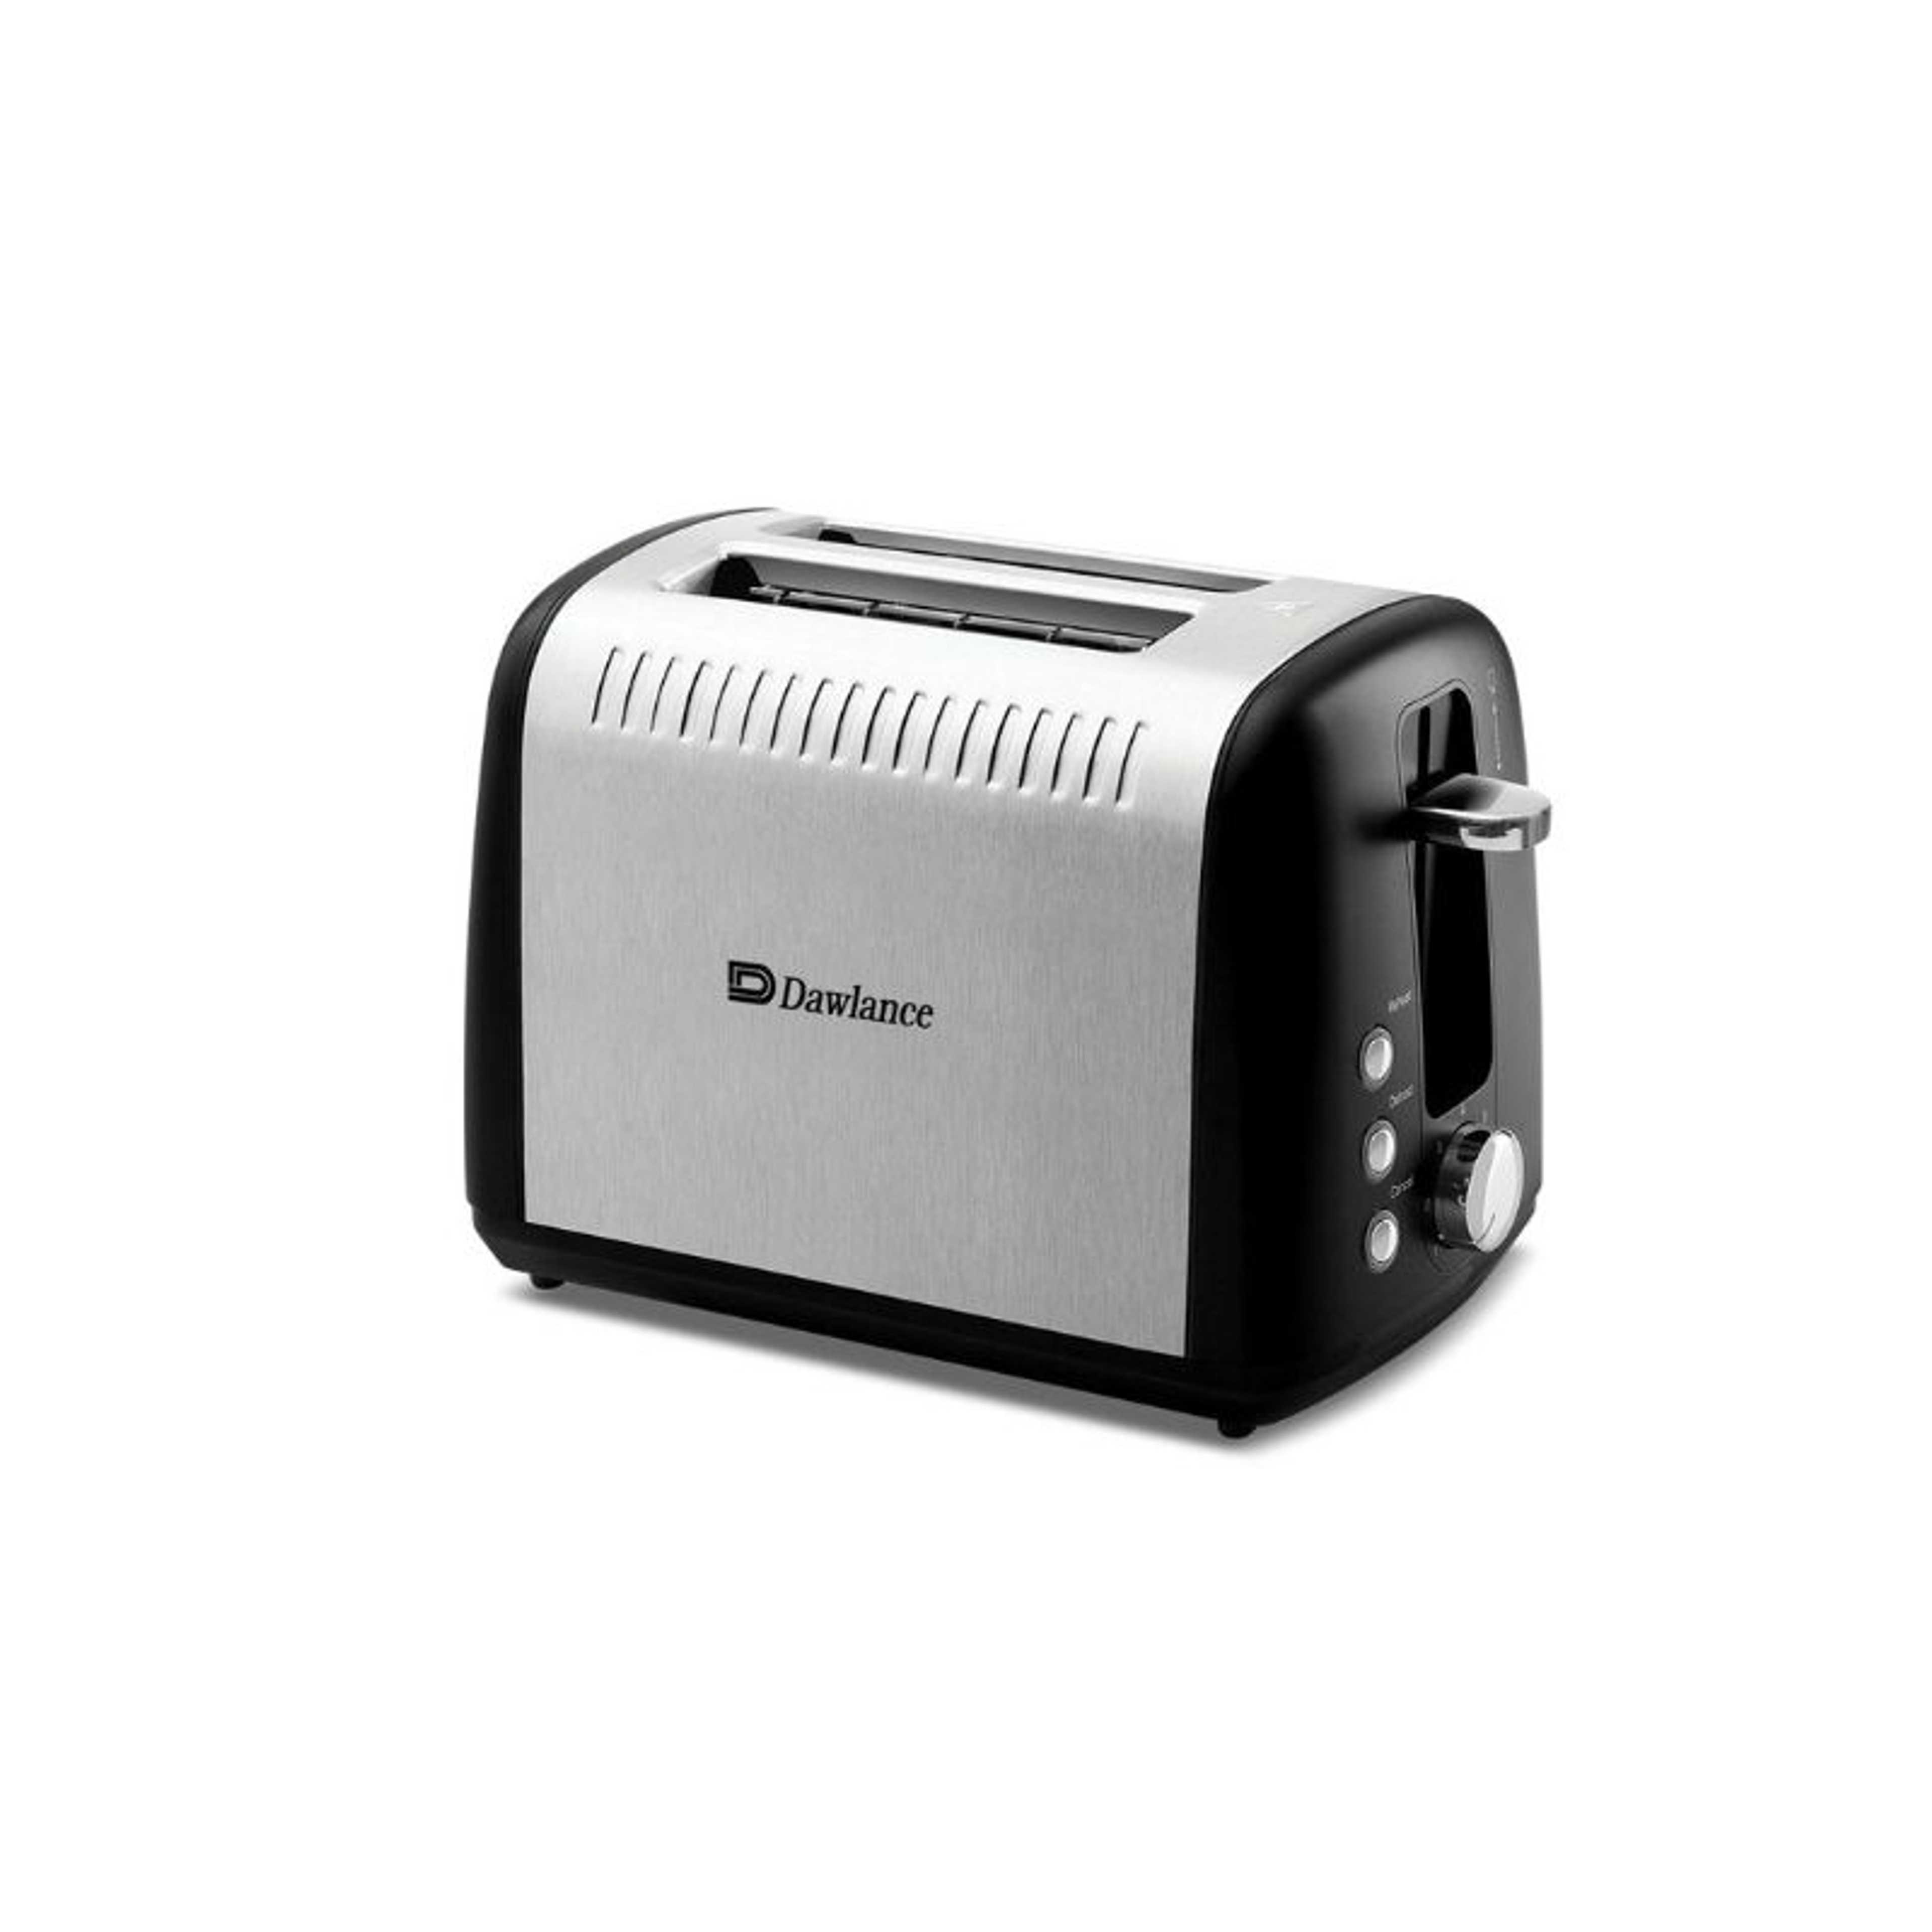 Dawlance Toaster - DWT-7290 | Kitchen Appliance